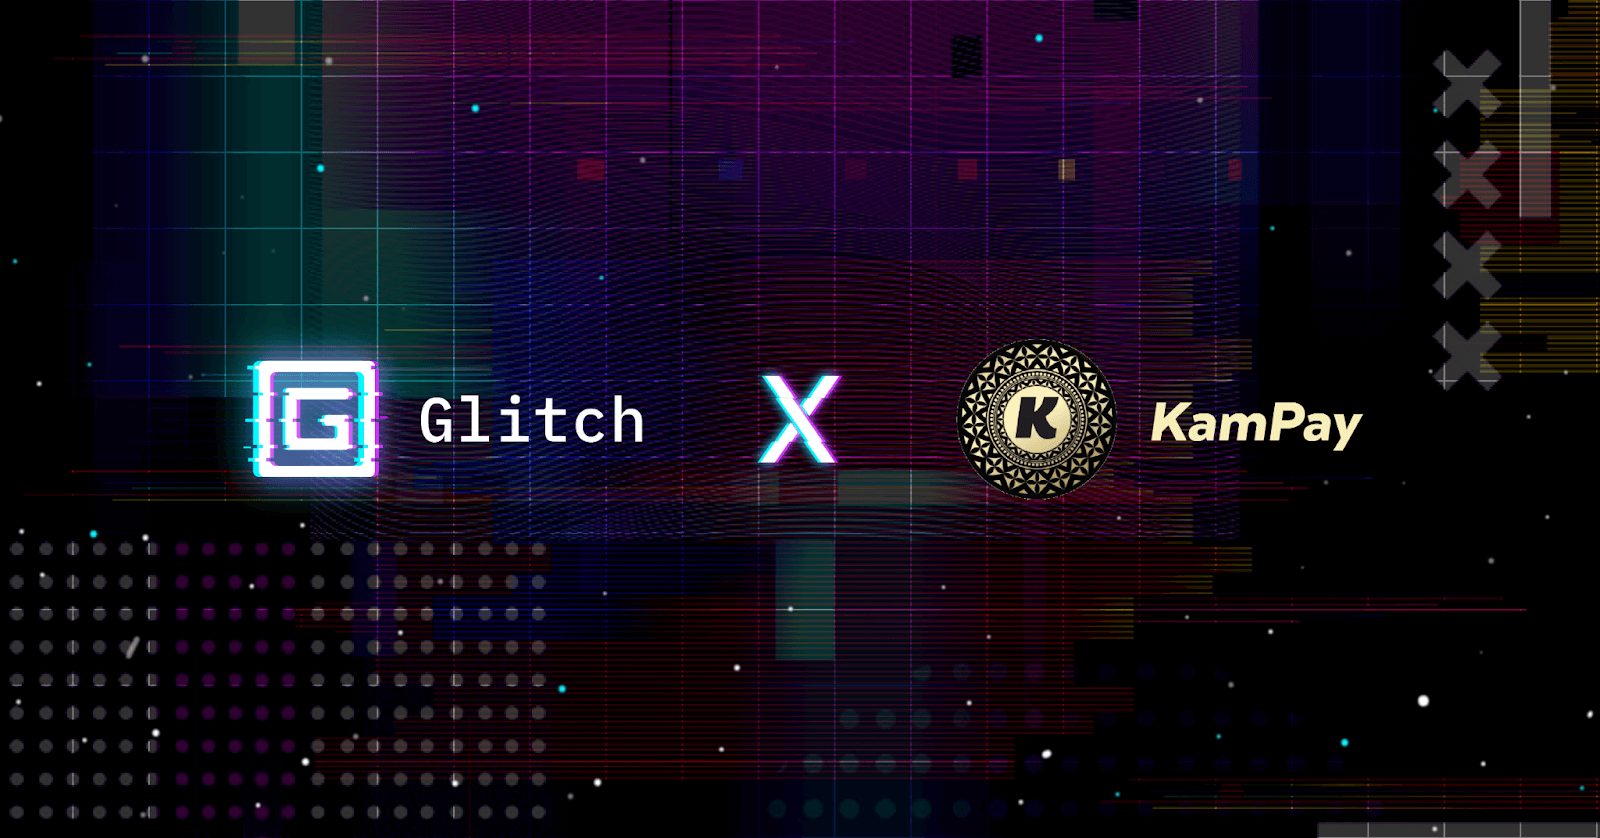 Glitch x KamPay Collaboration